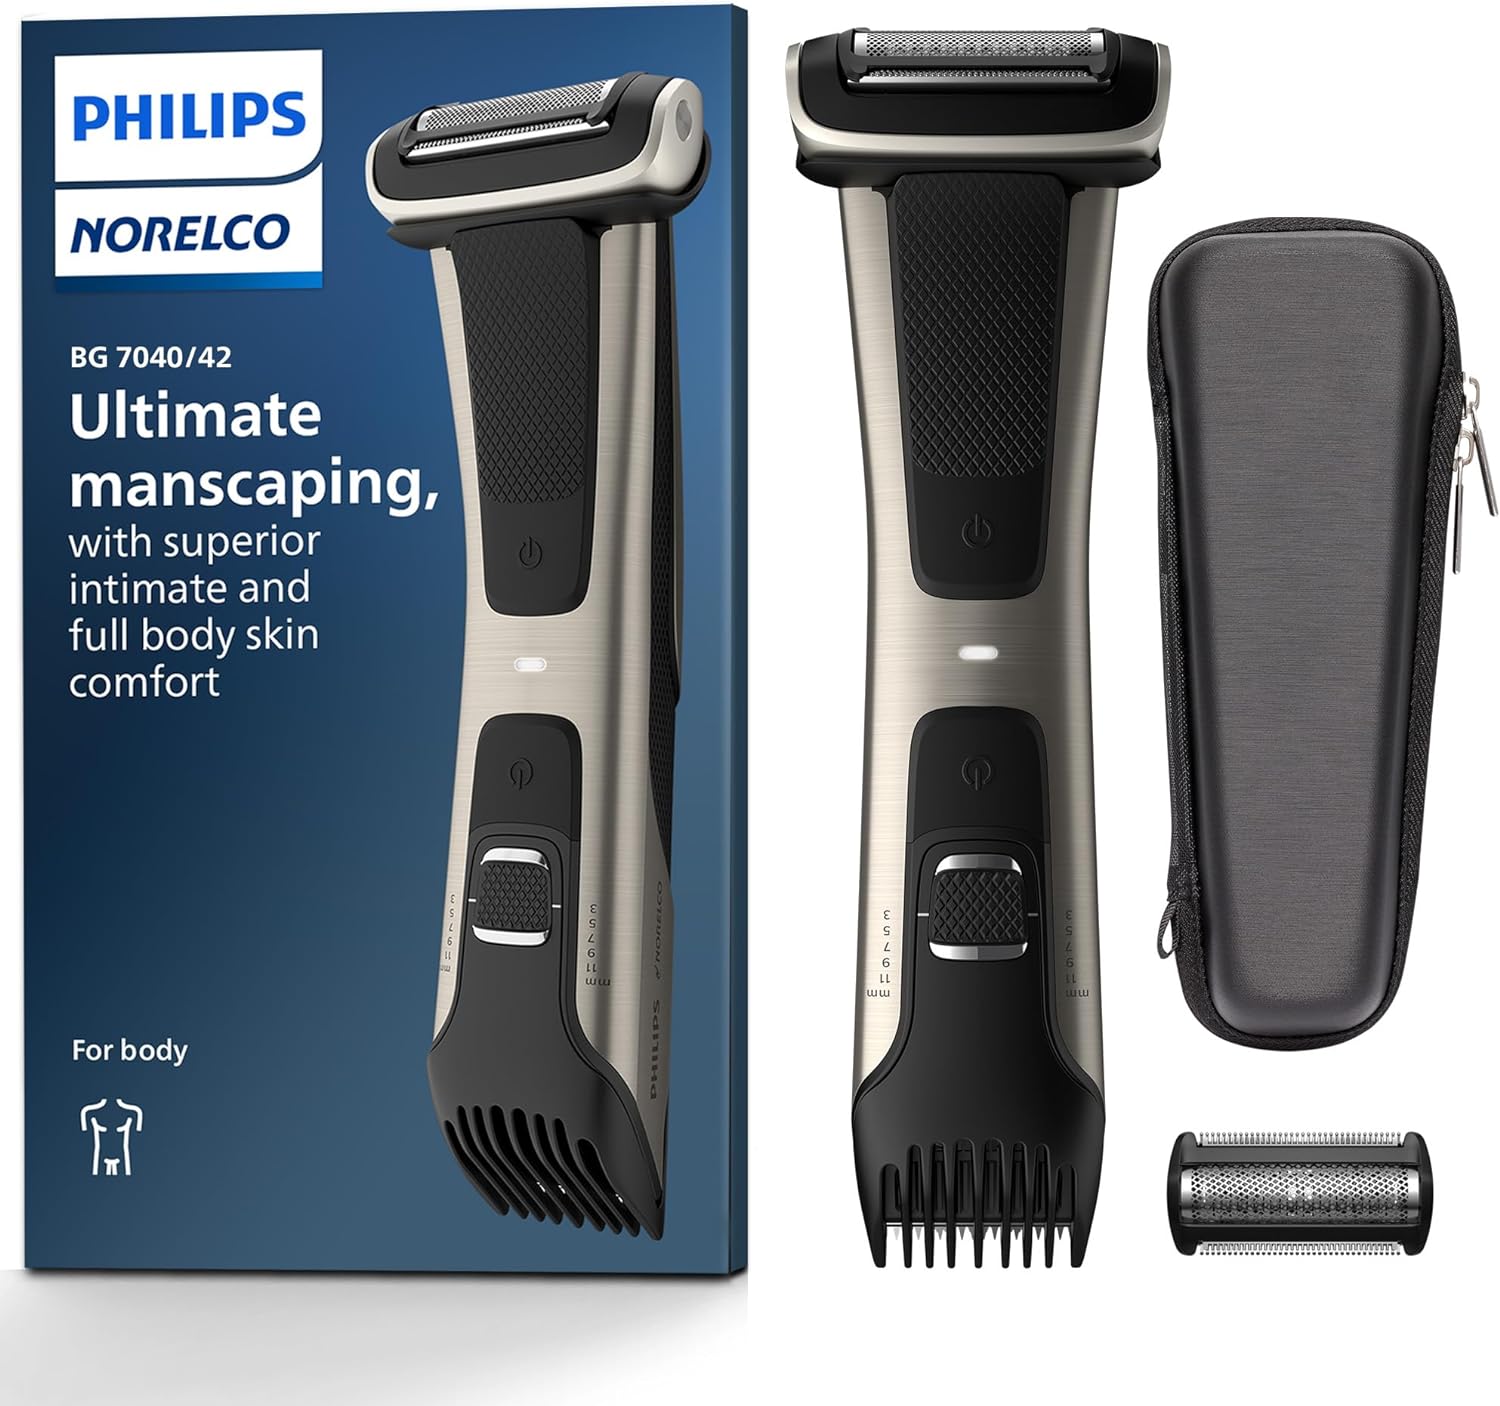 Philips Norelco Exclusive Bodygroom Series